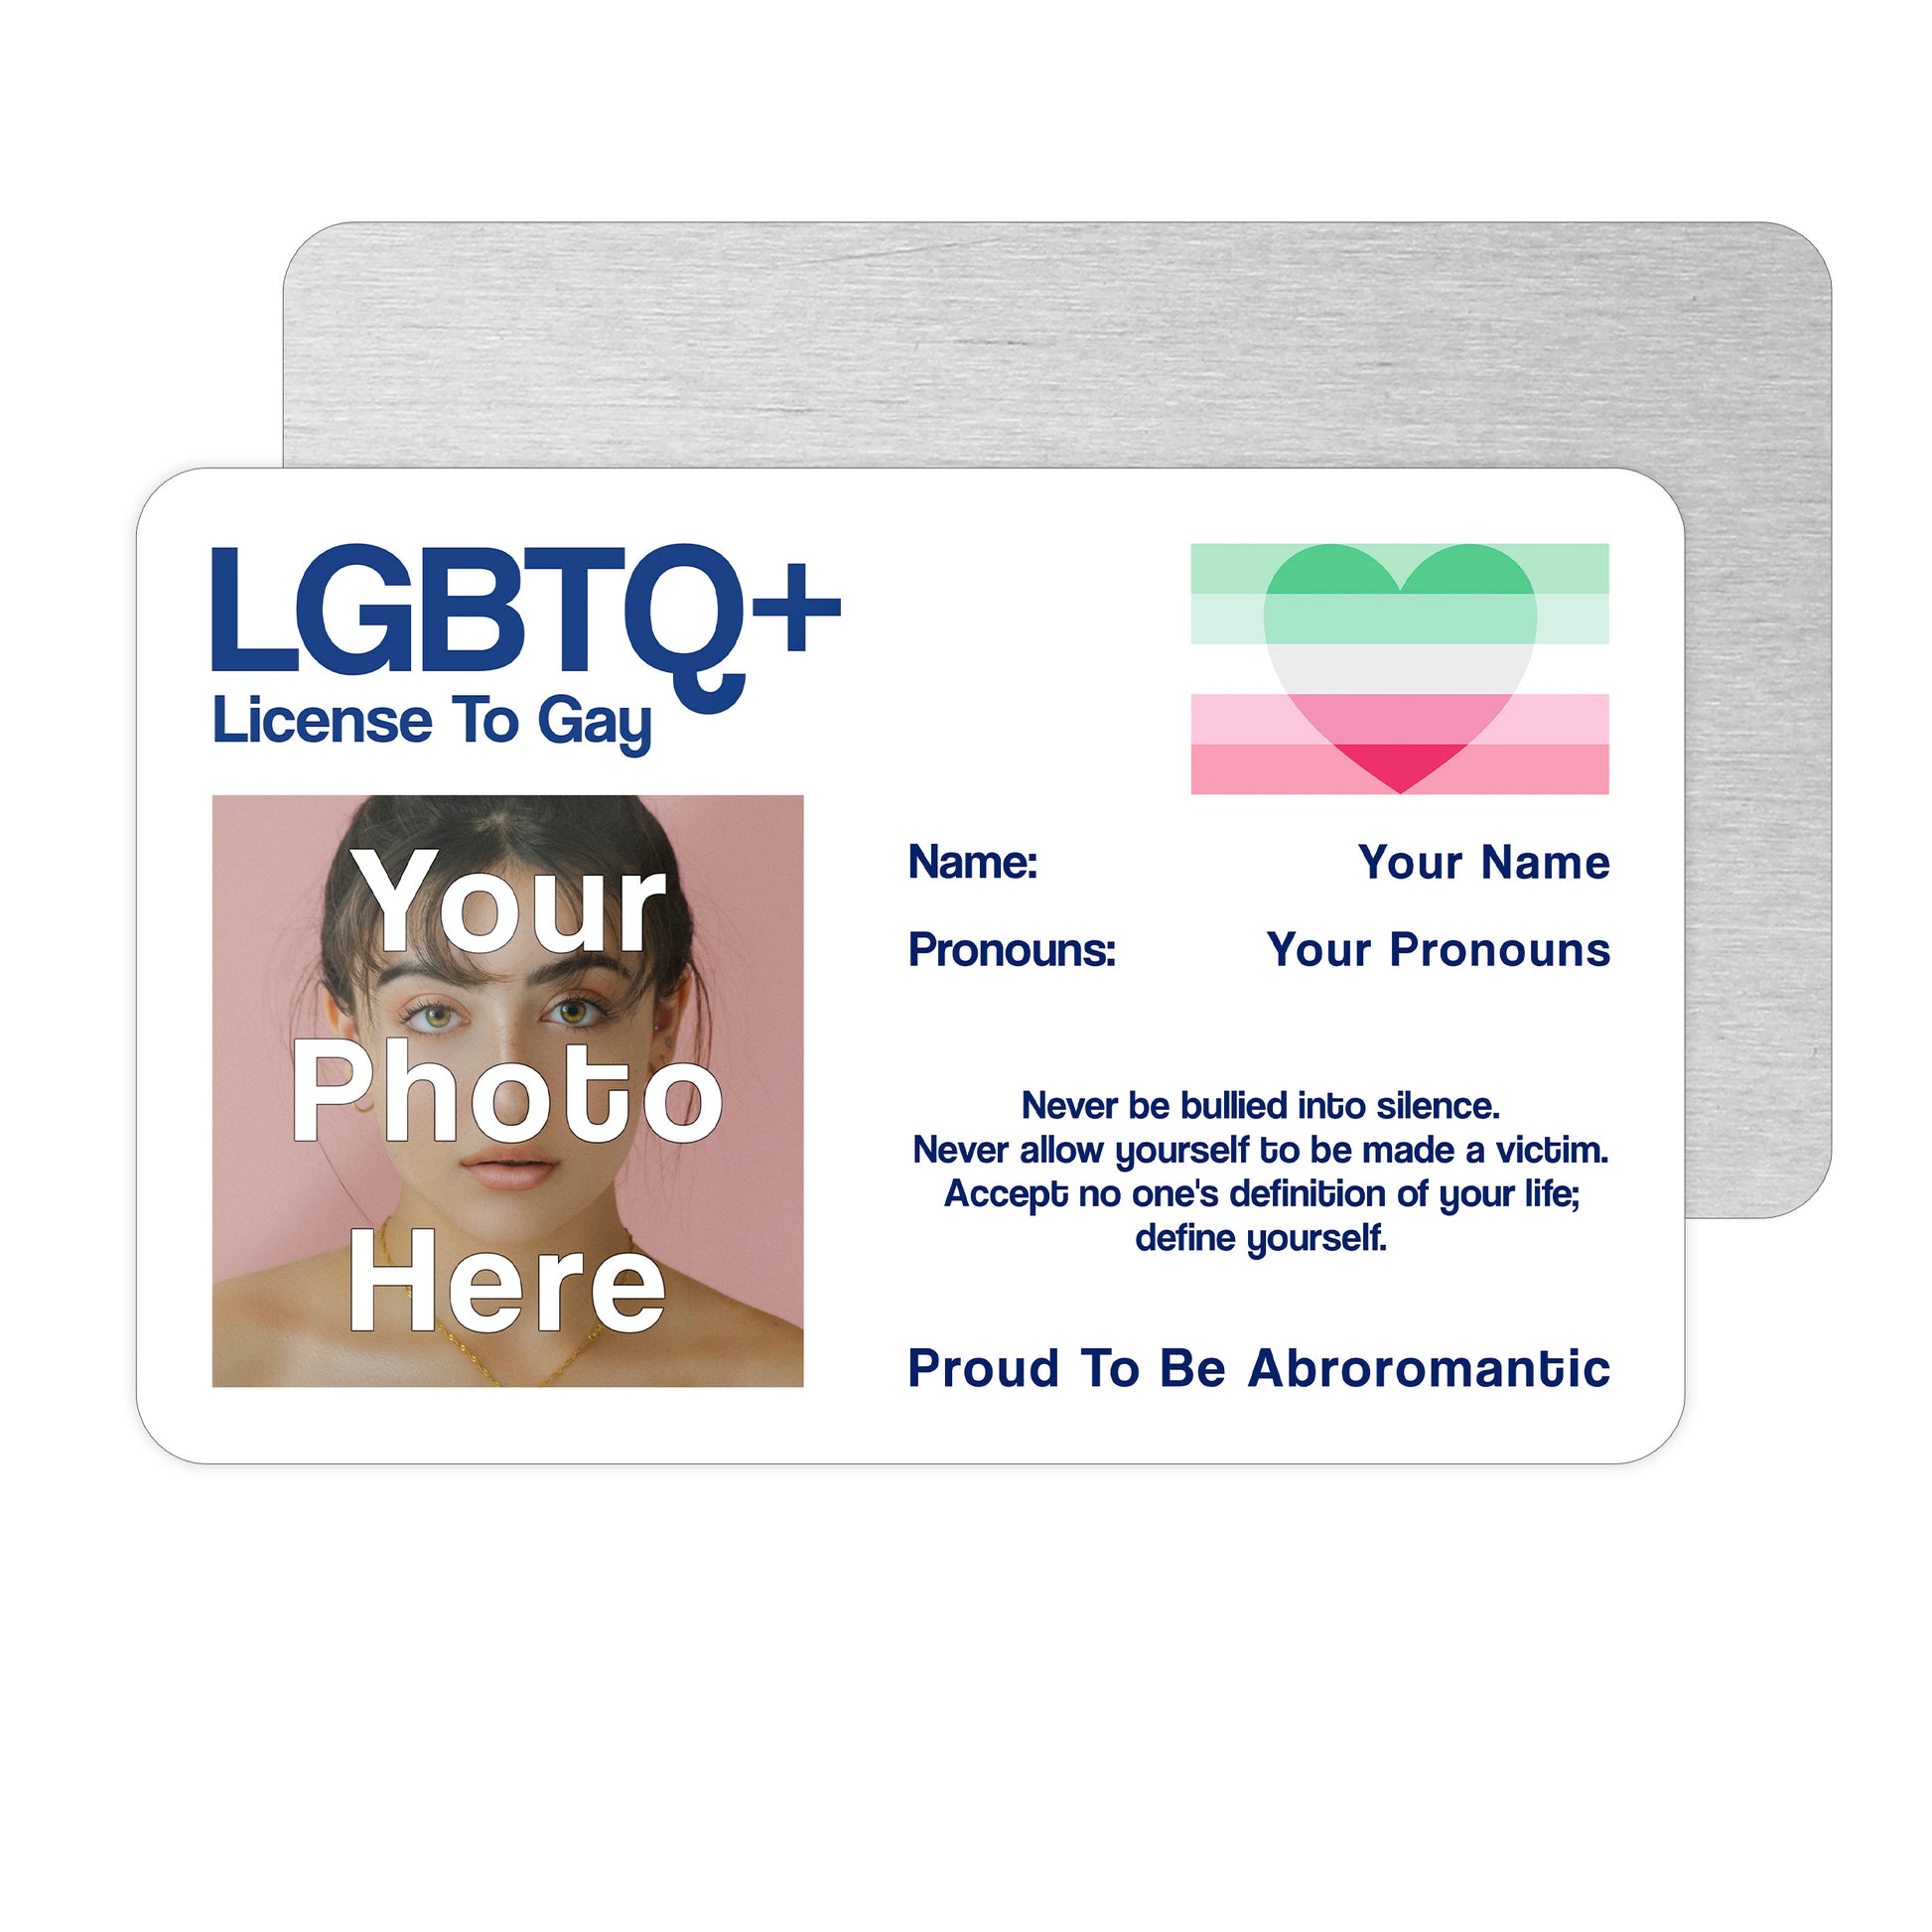 Abroromantic license to gay